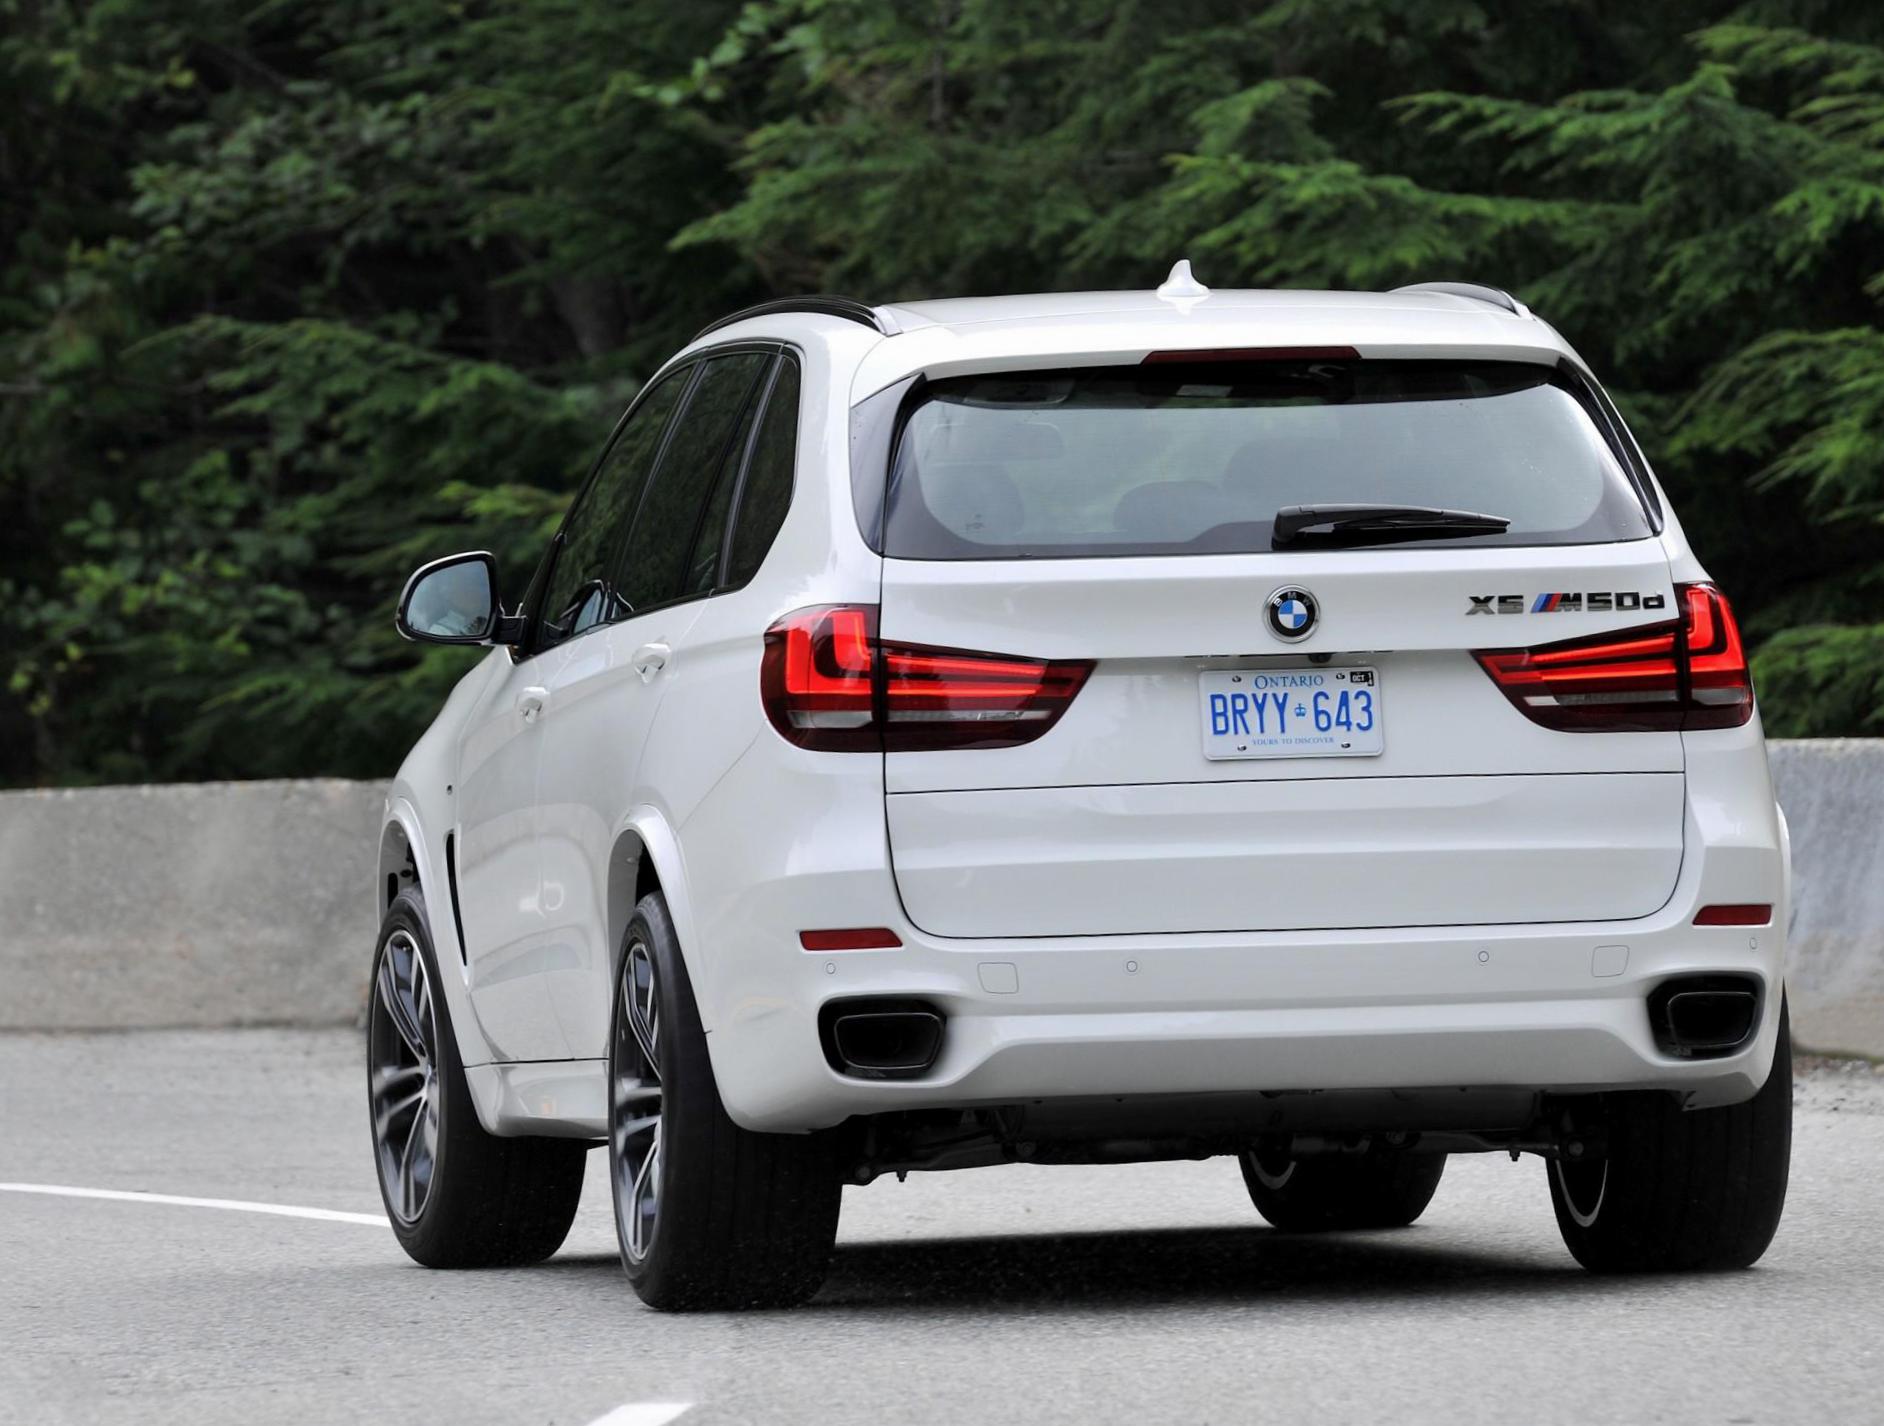 BMW X5 (F15) for sale 2015